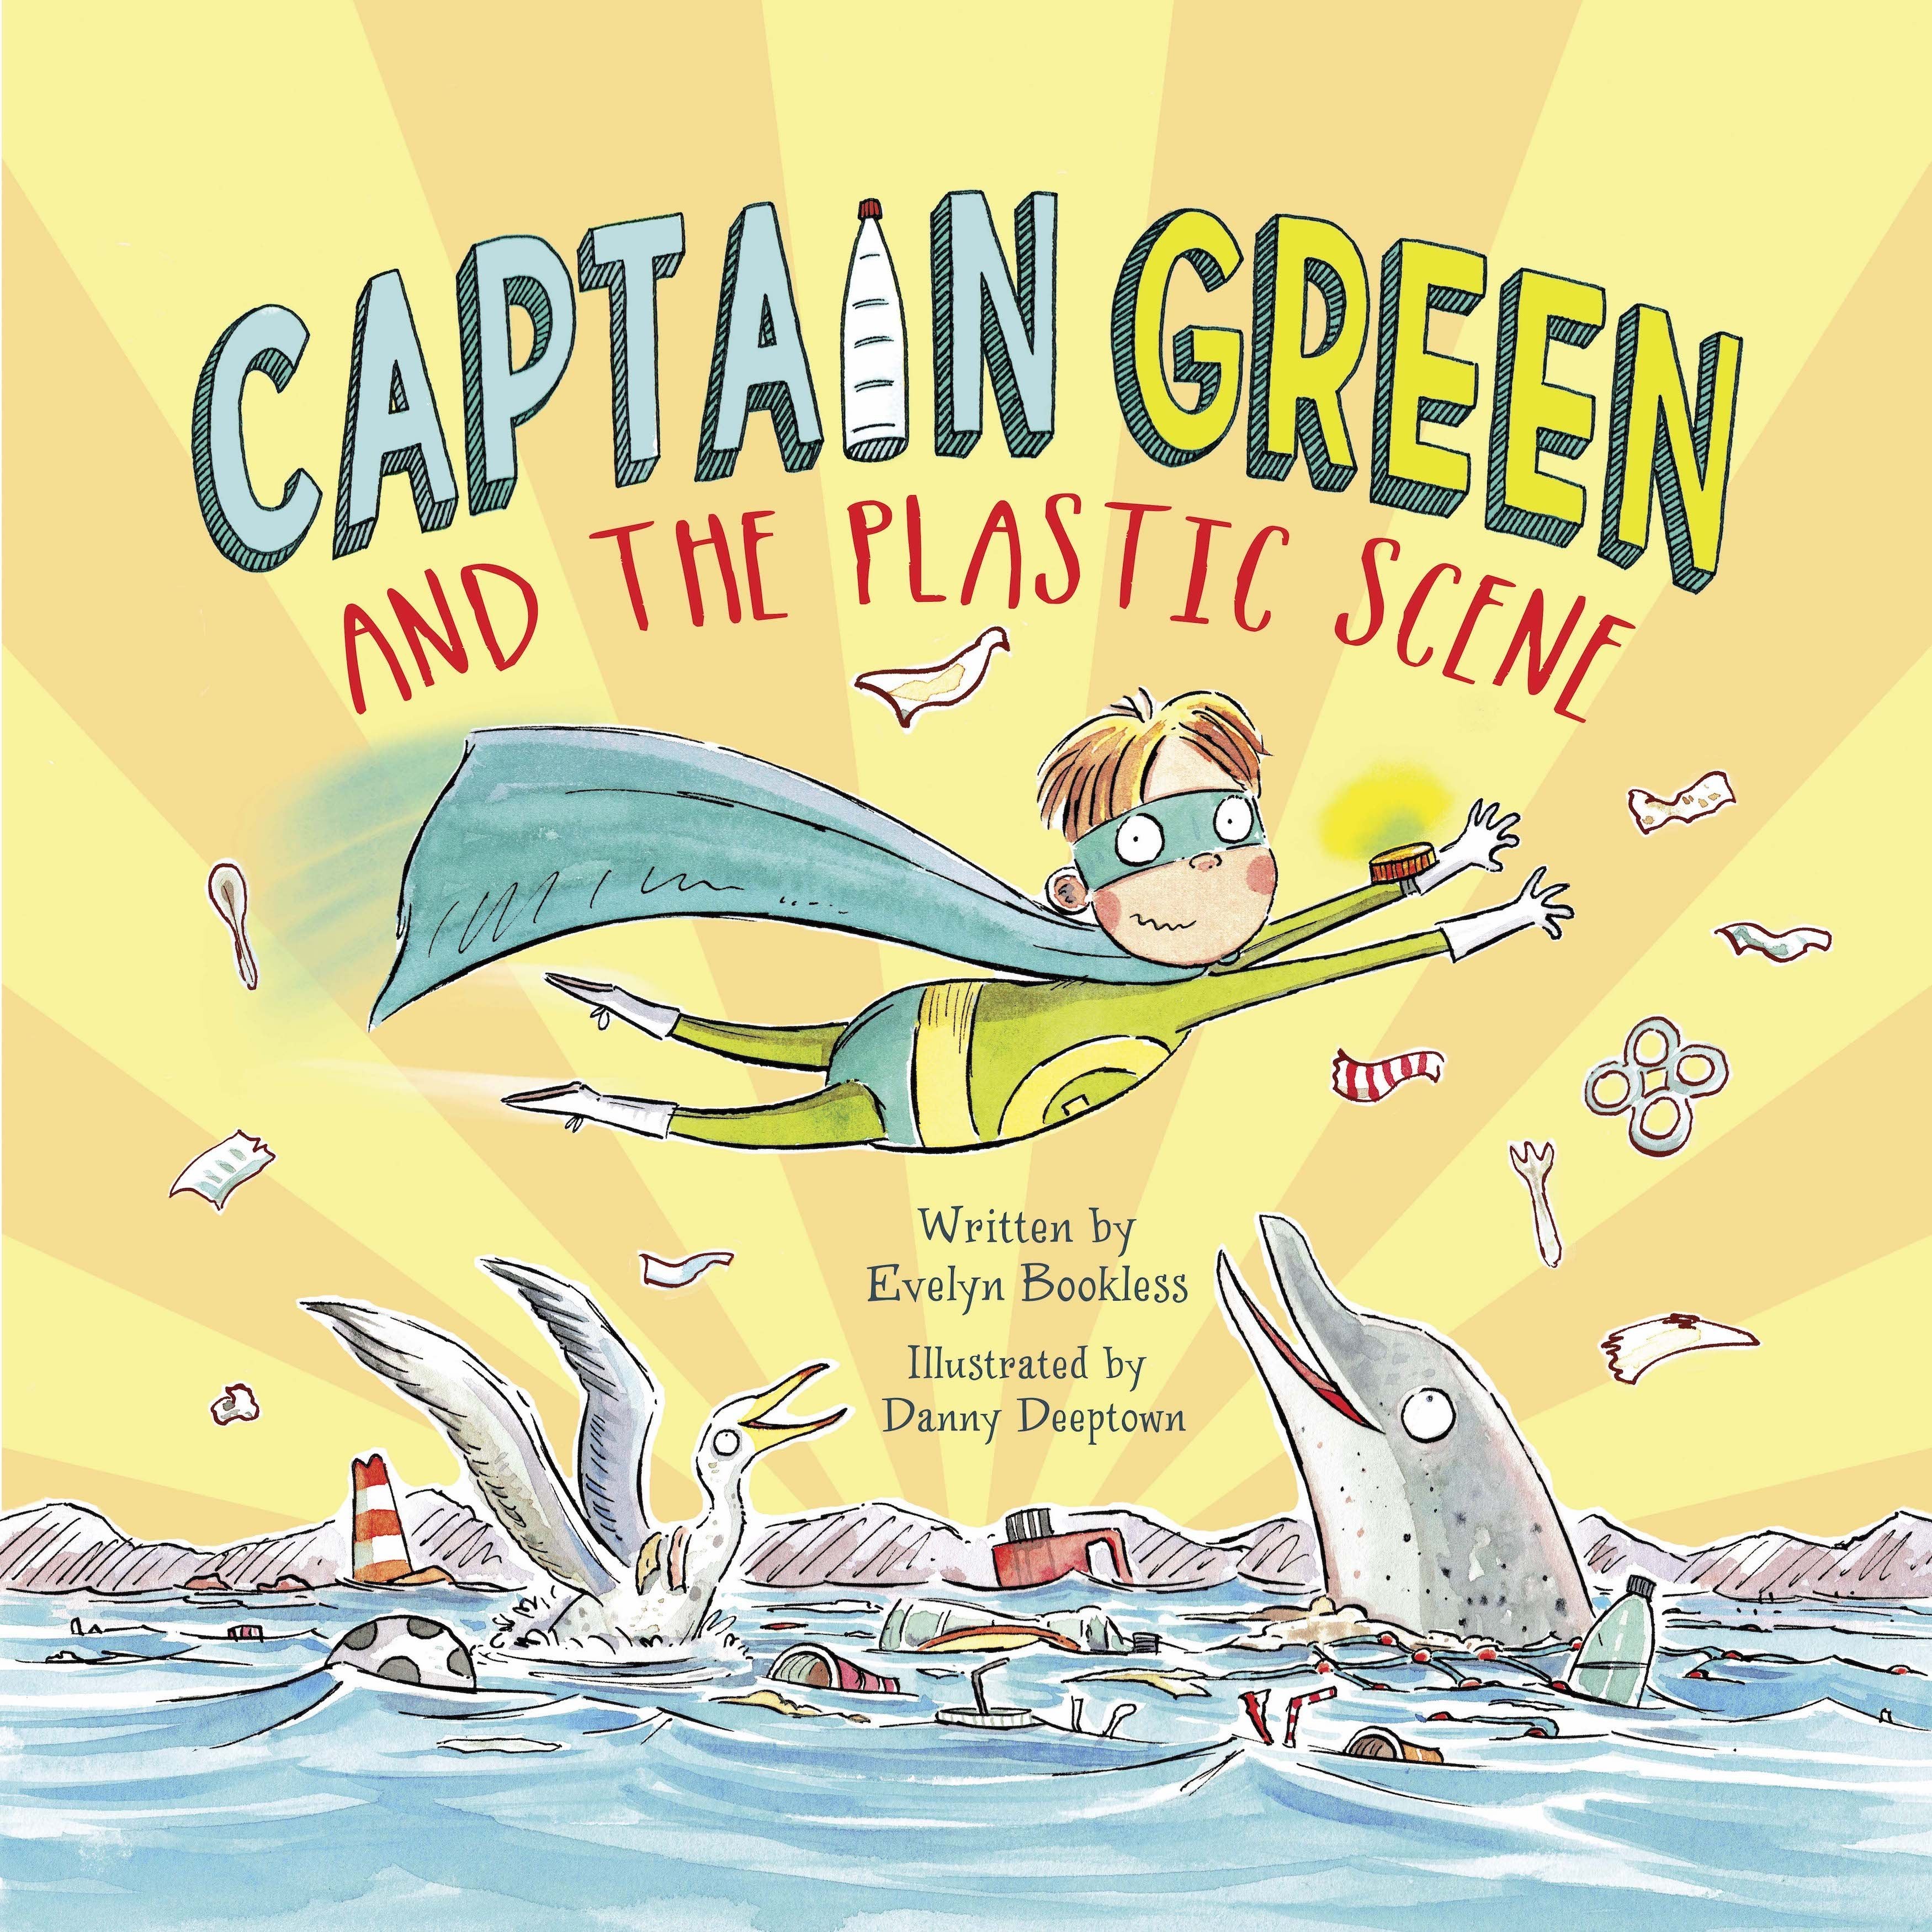 Captain Green And The Plastic Scene